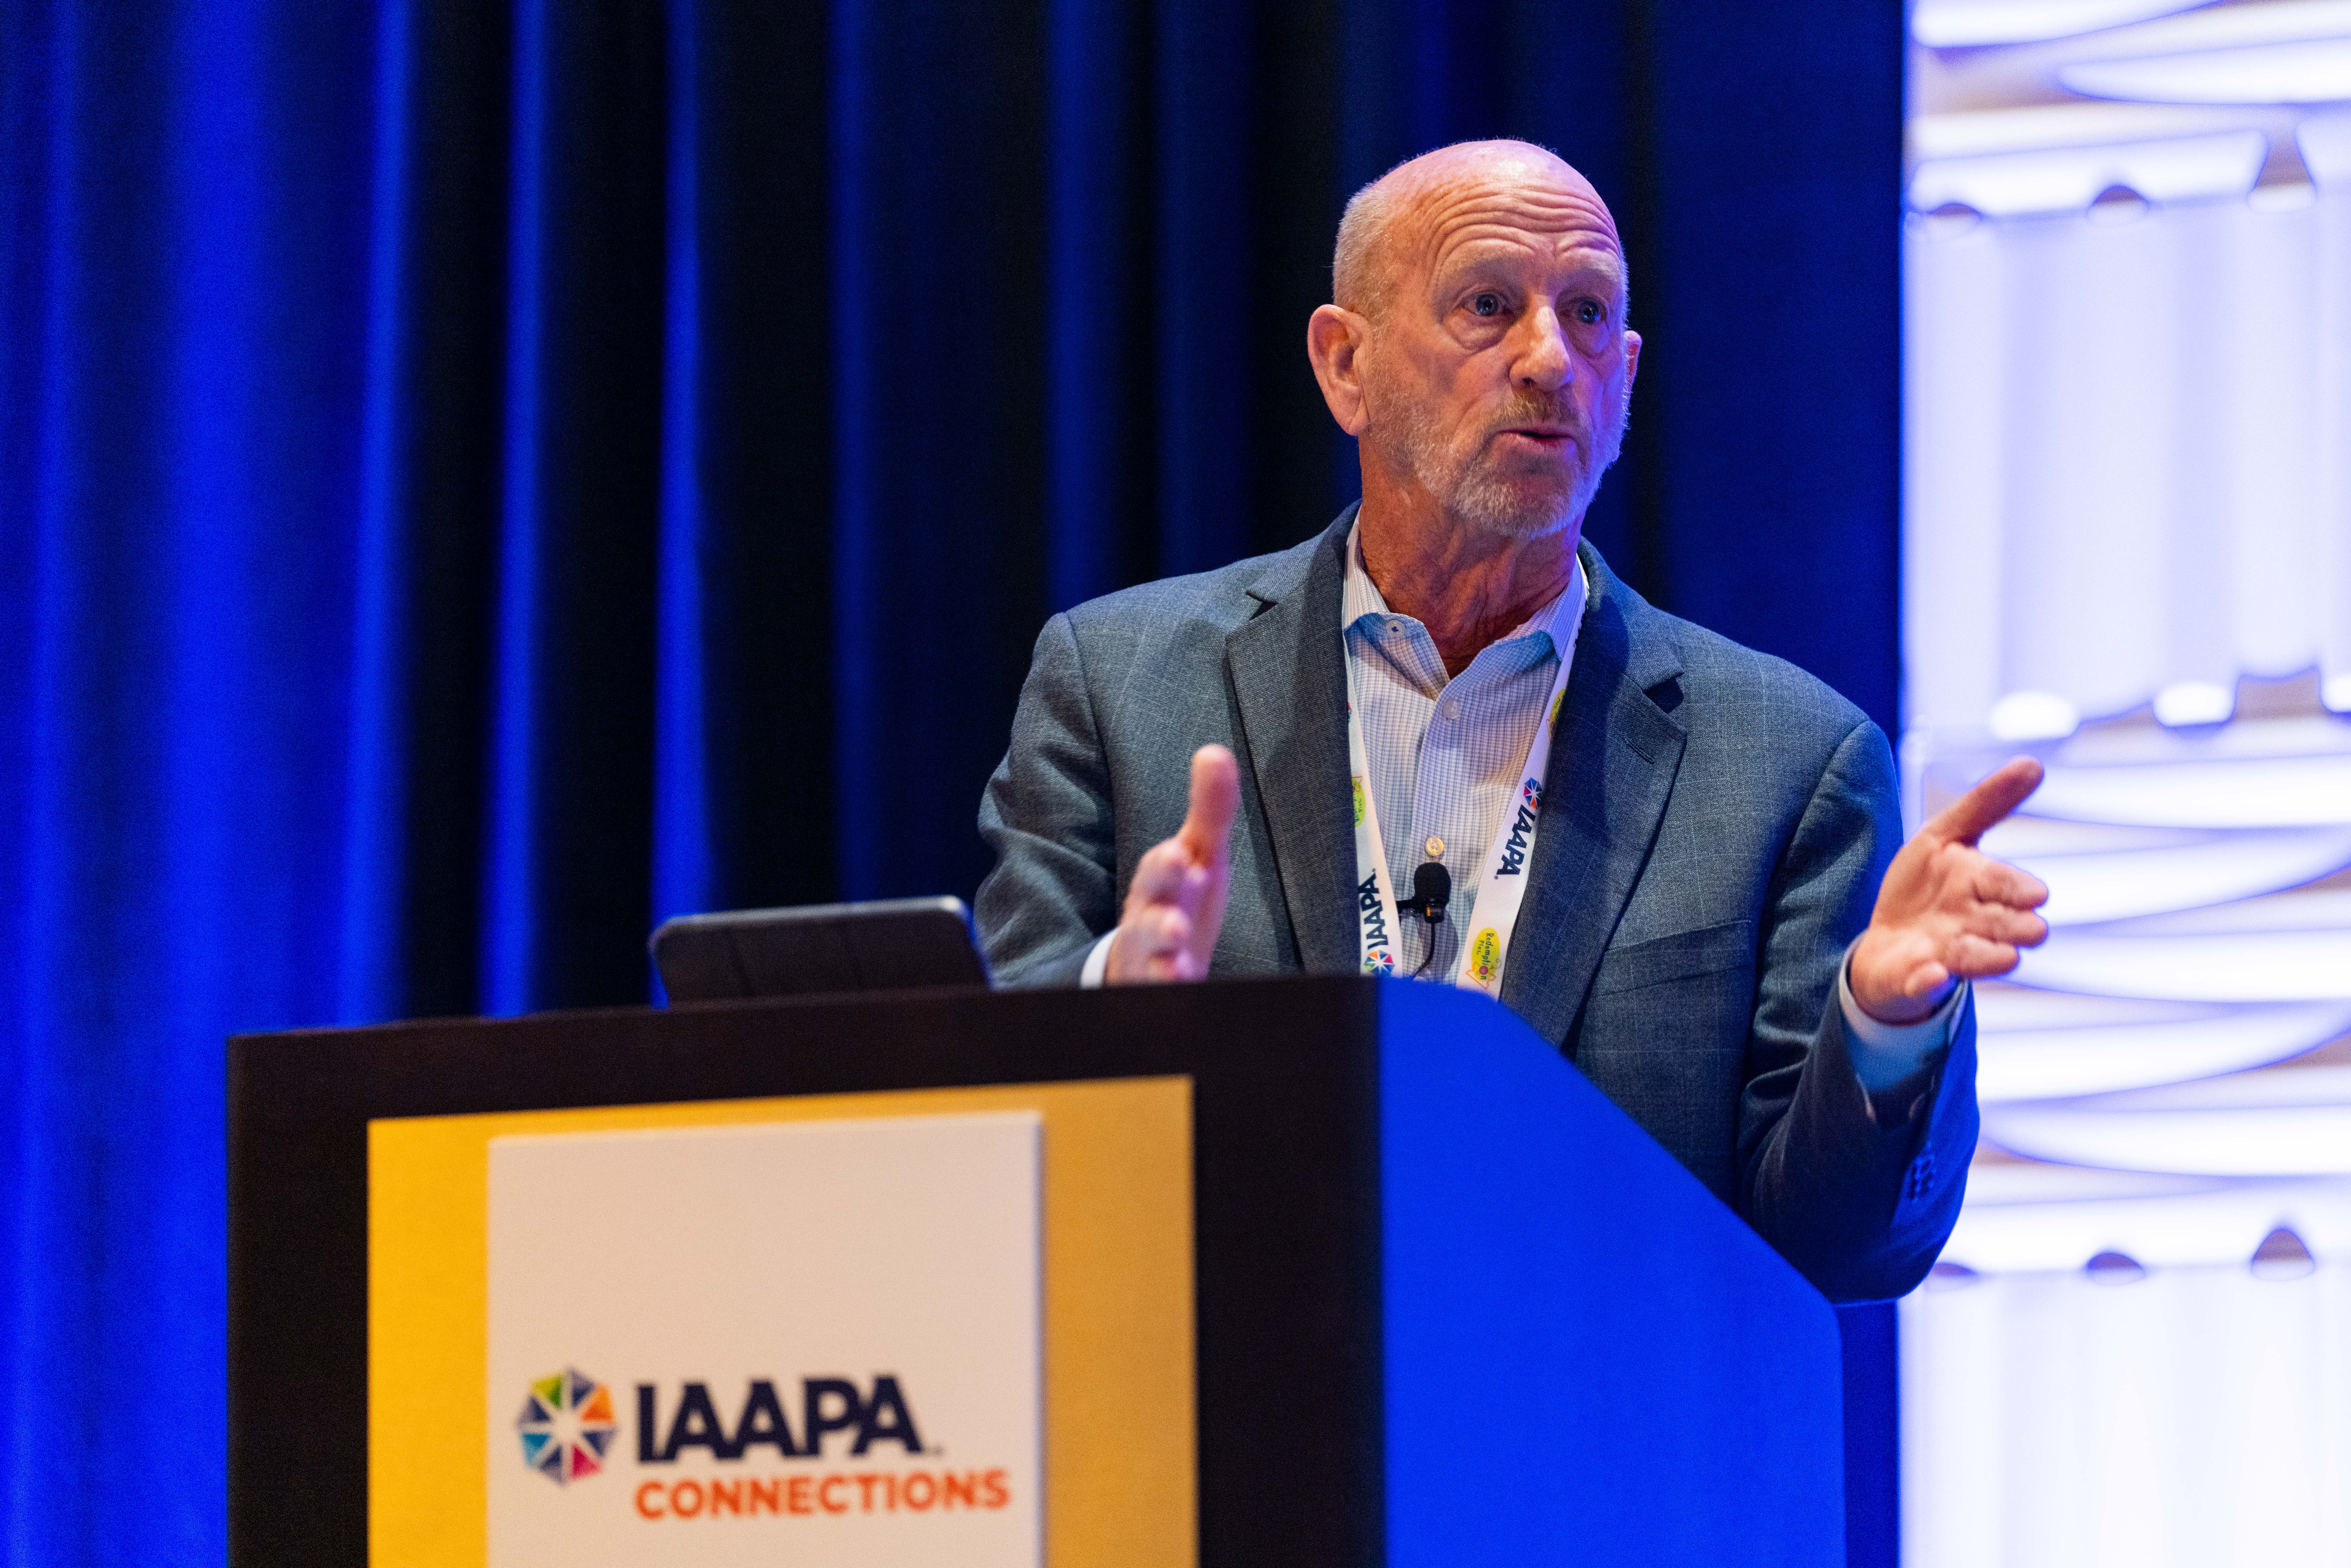 Il presidente dell'IAAPA, Ken Whiting, si rivolge al Vertice FEC 2022